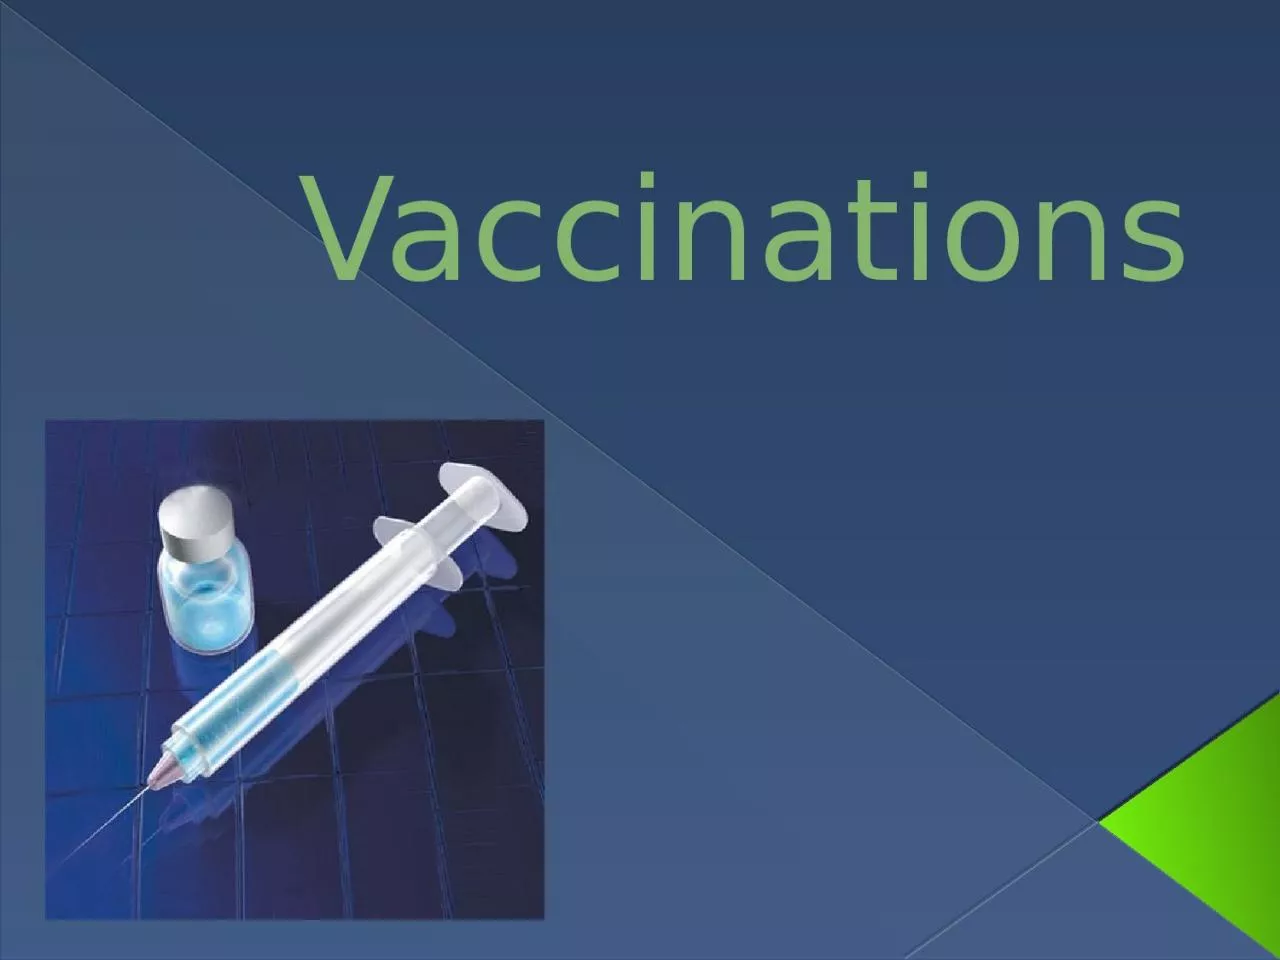 Vaccinations Immunity Active